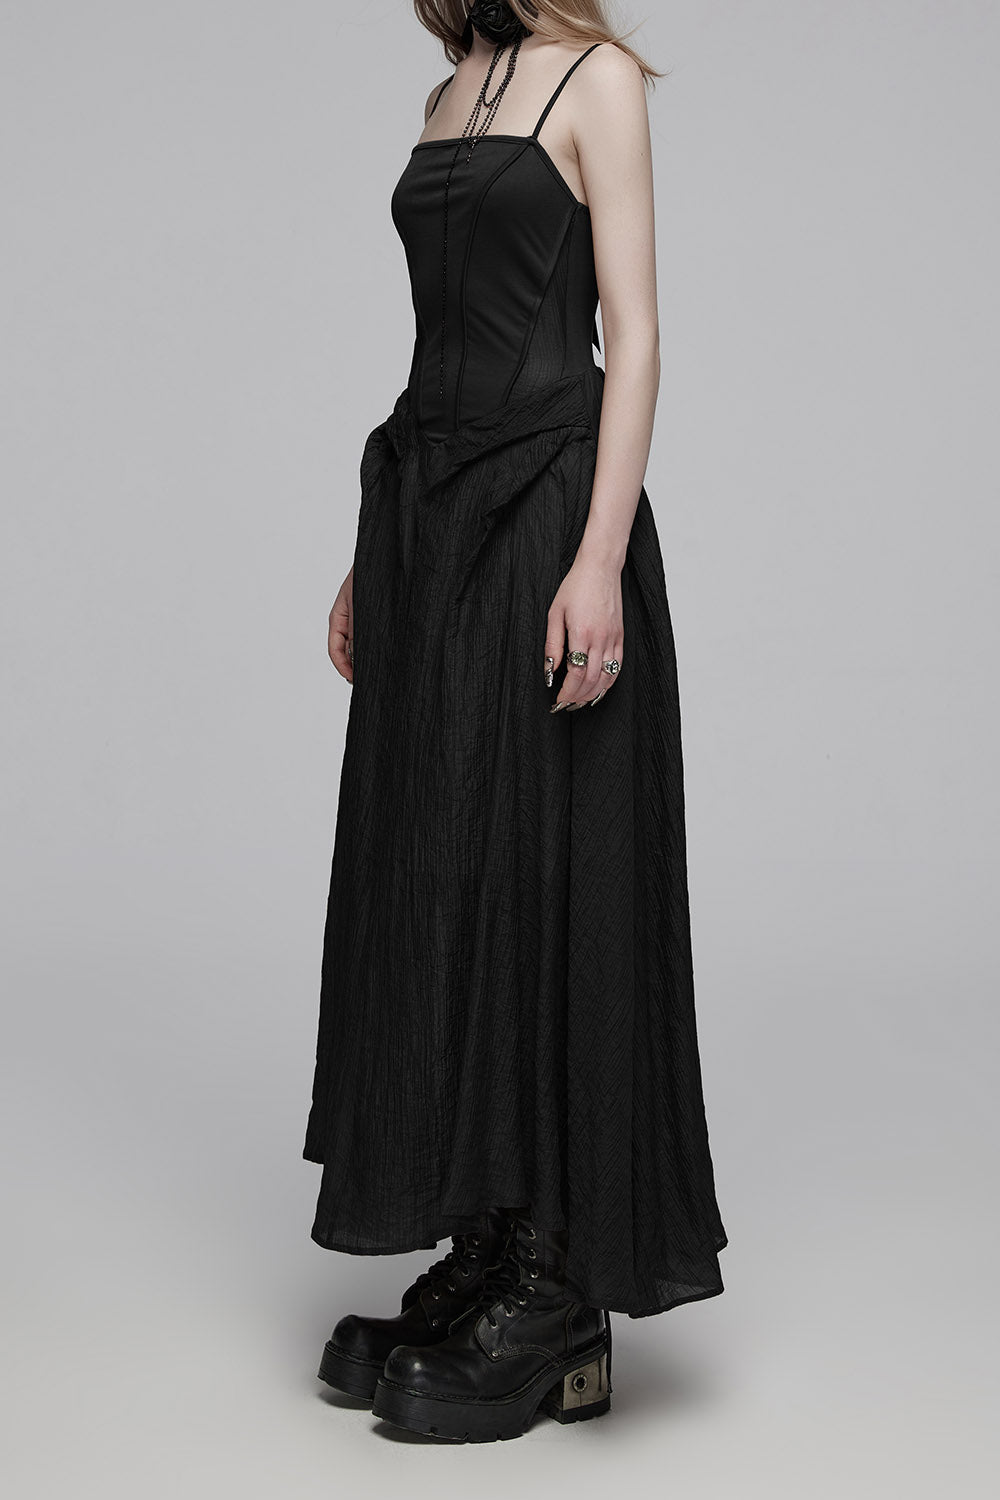 womens black antique dress